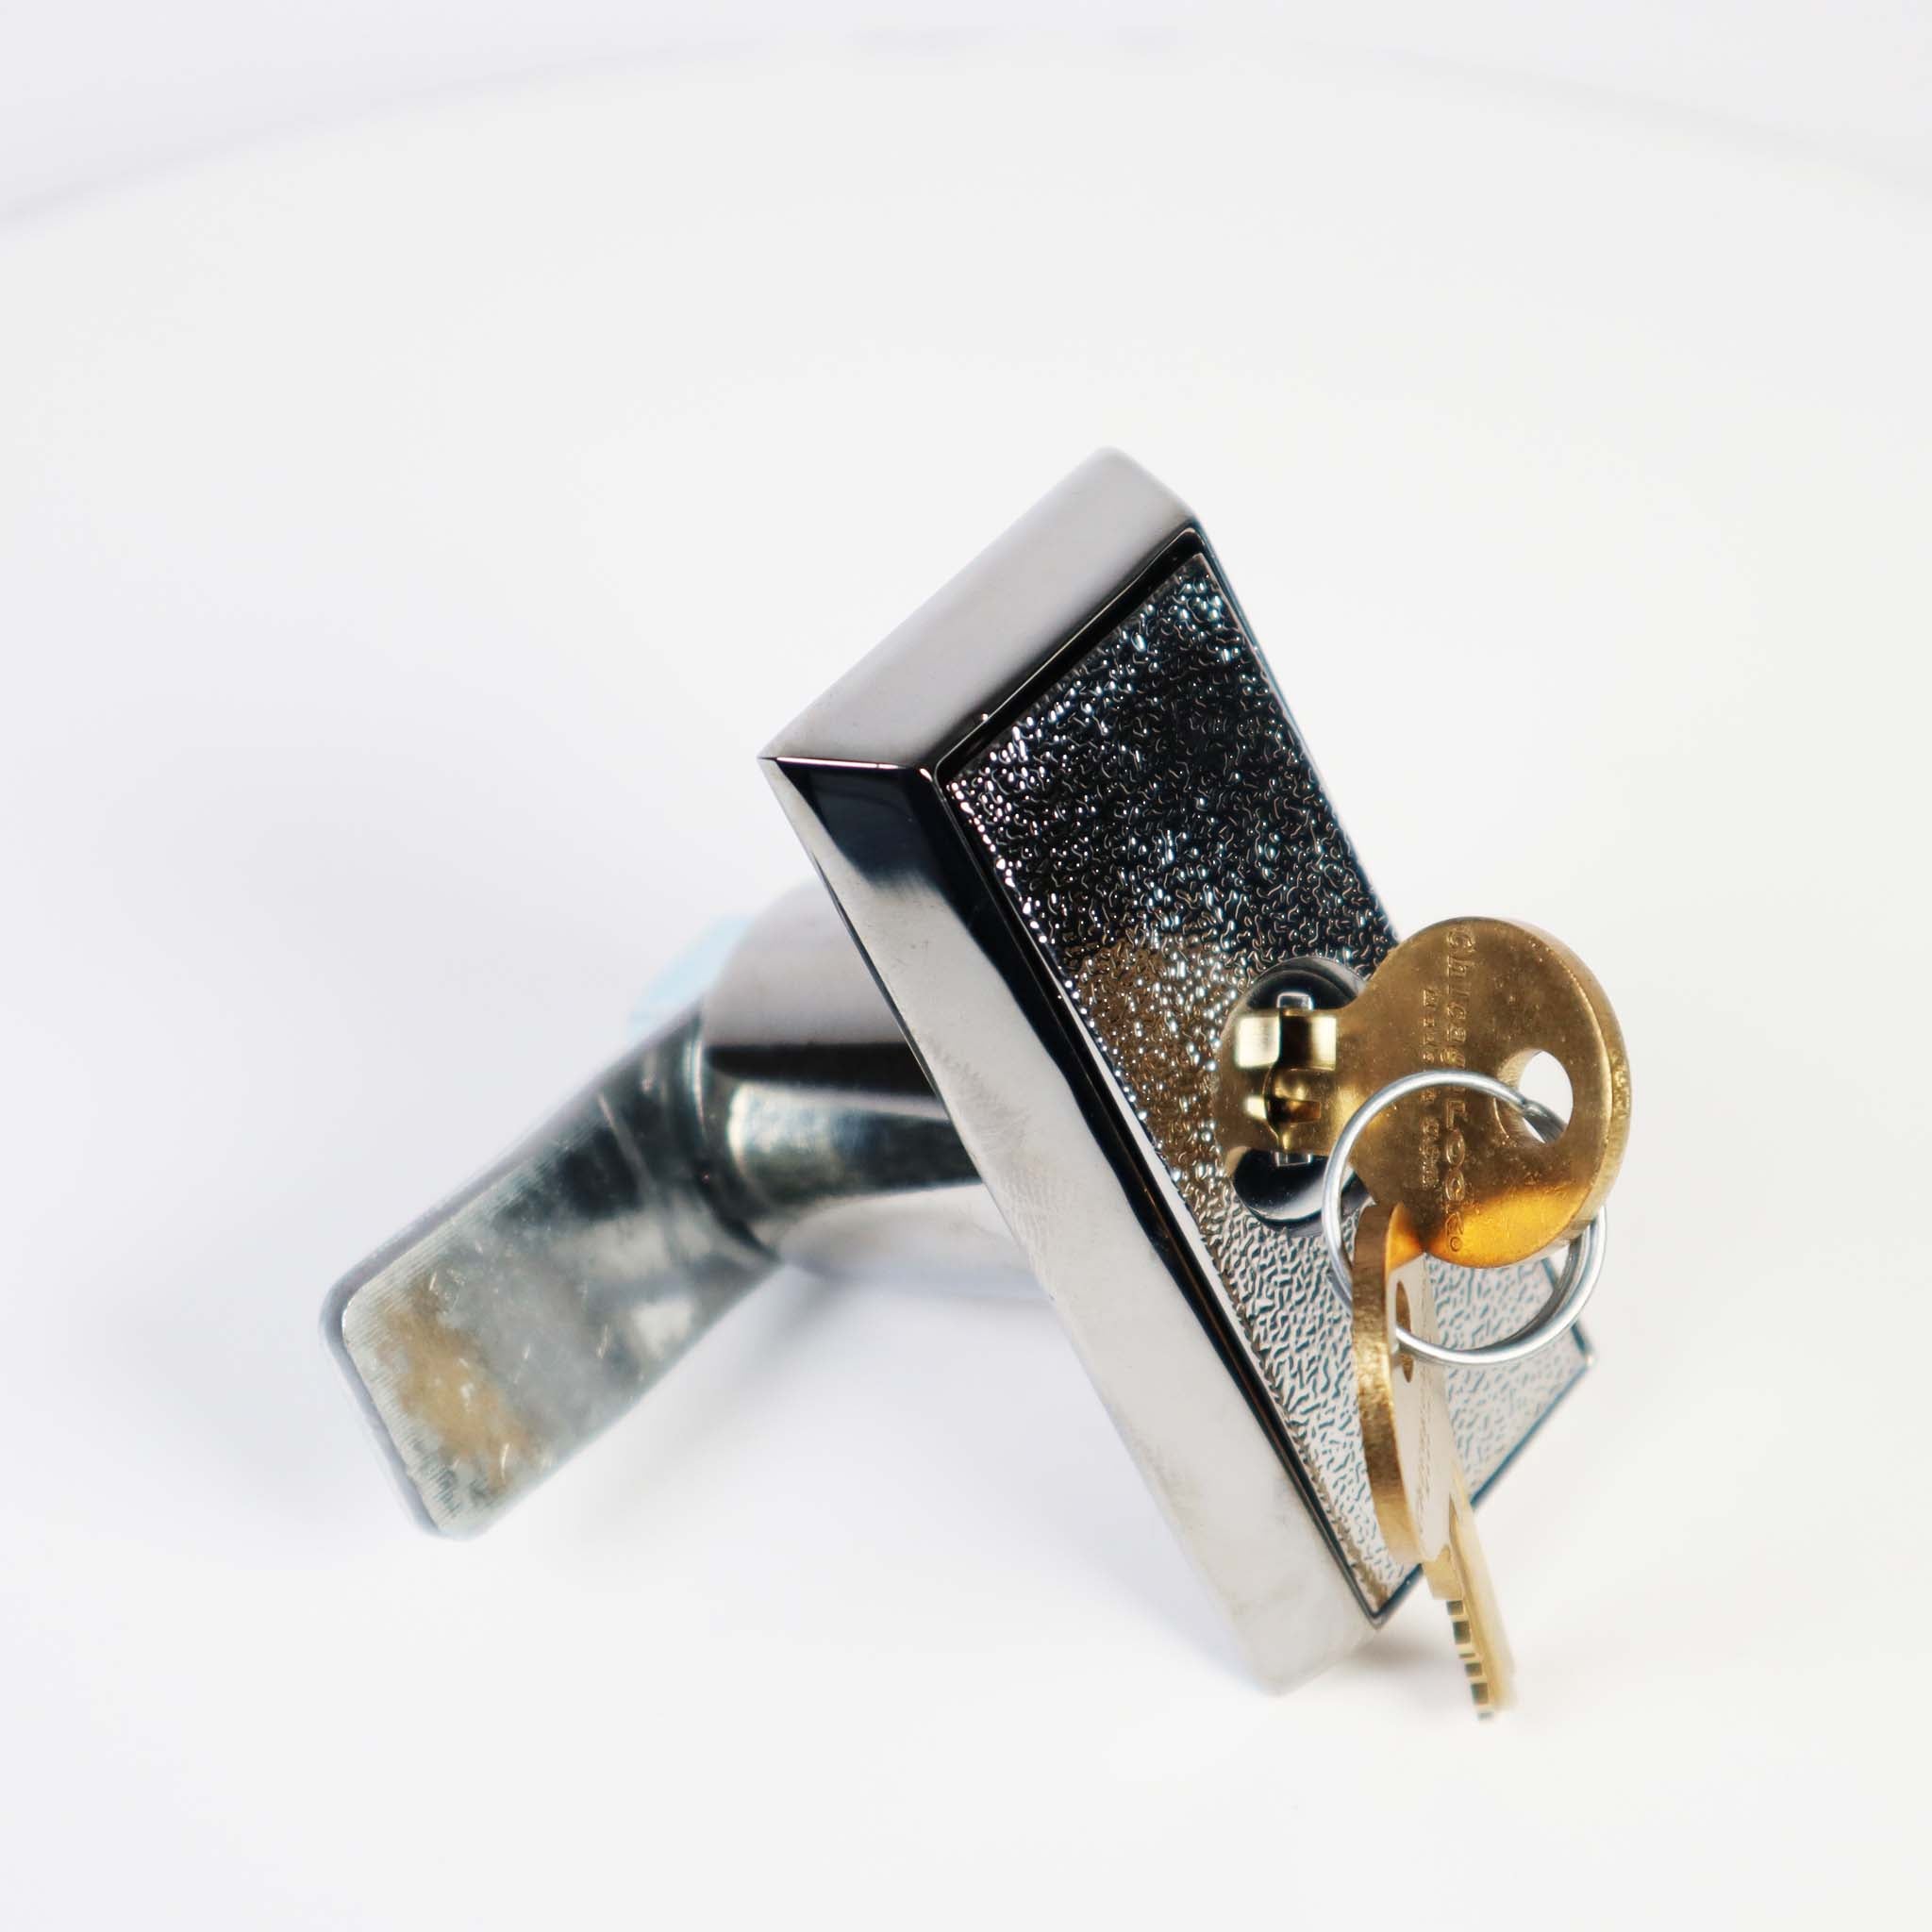 Linear 2110-643 Lock Assembly with Keys